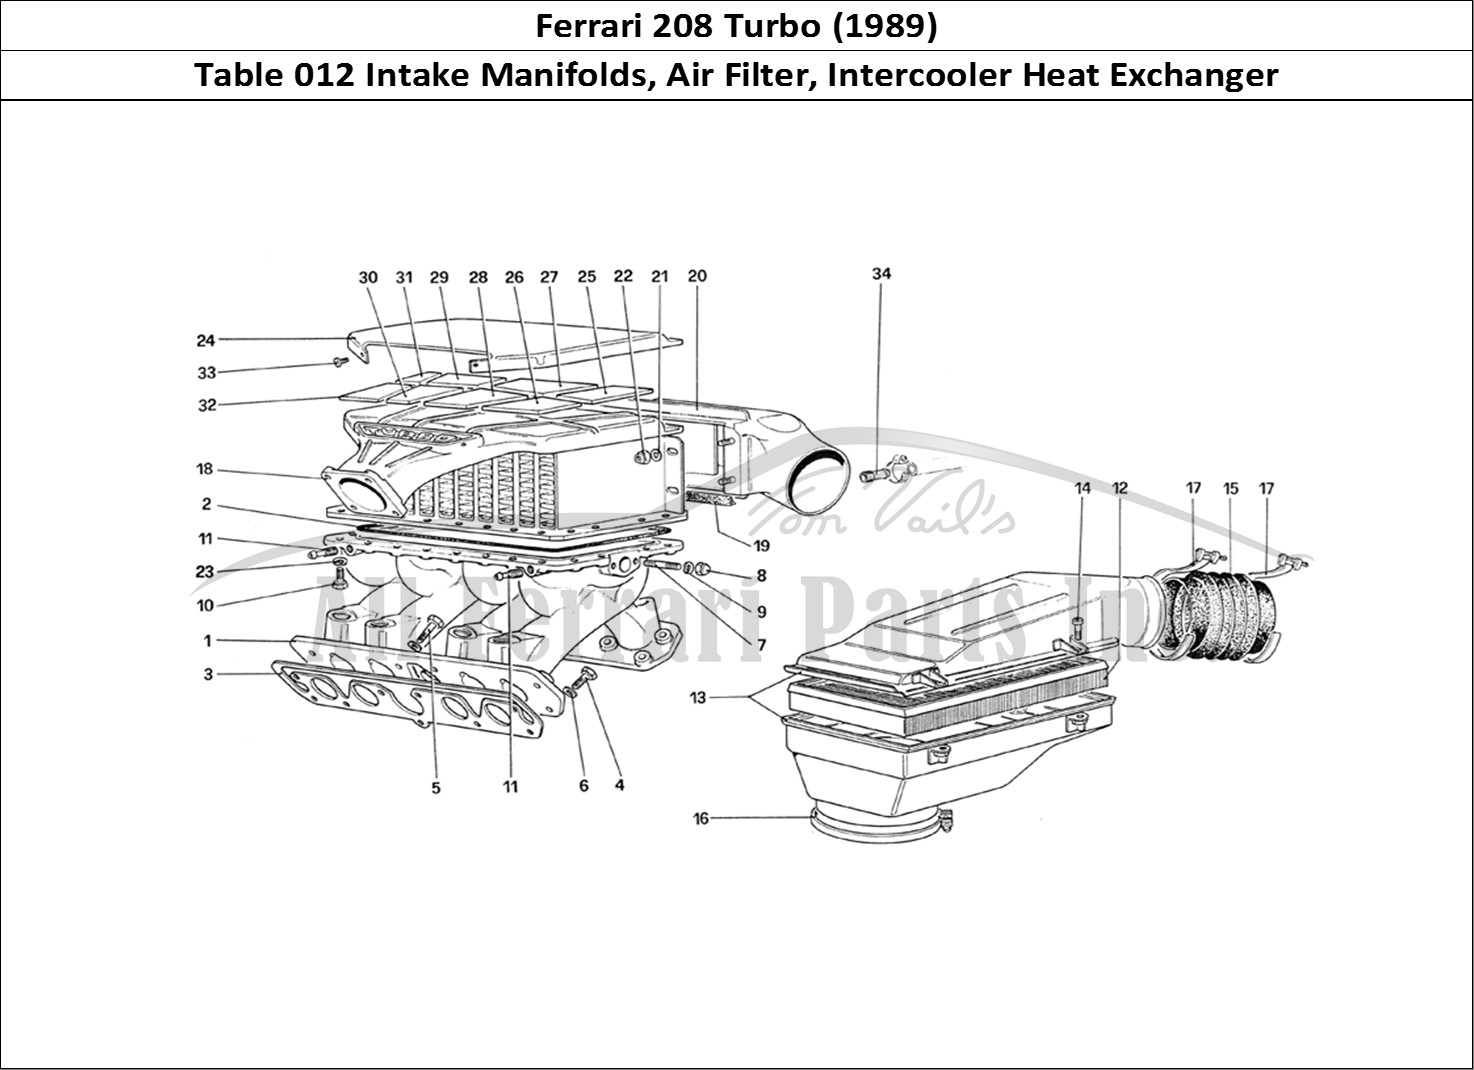 Ferrari Parts Ferrari 208 Turbo (1989) Page 012 Air Intake, Manifolds and